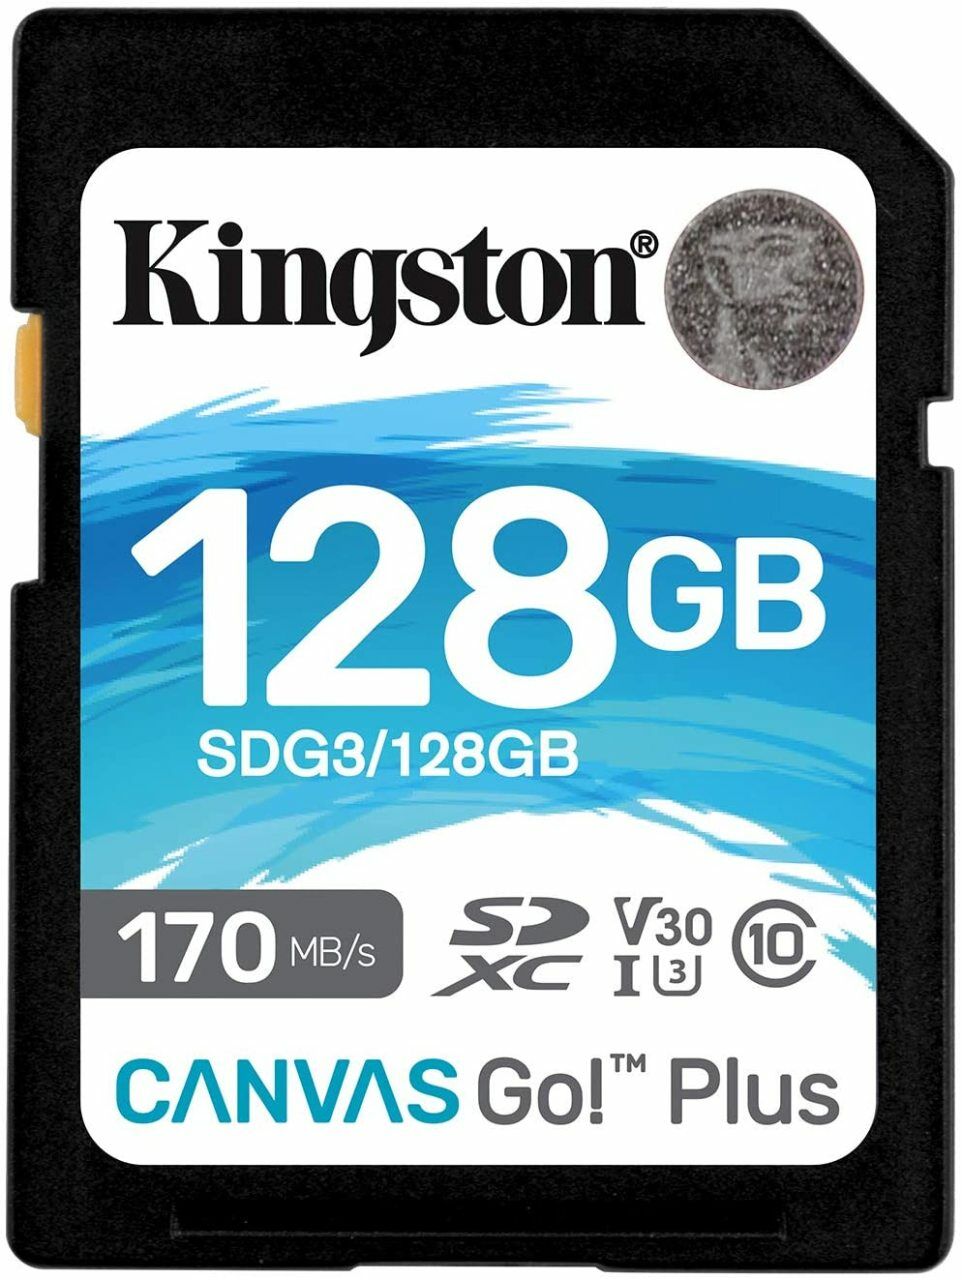 KINGSTON 128GB SDXC CANVAS GO PLUS 170R C10 UHS-I U3 V30 SD CARD SDG3/128GB